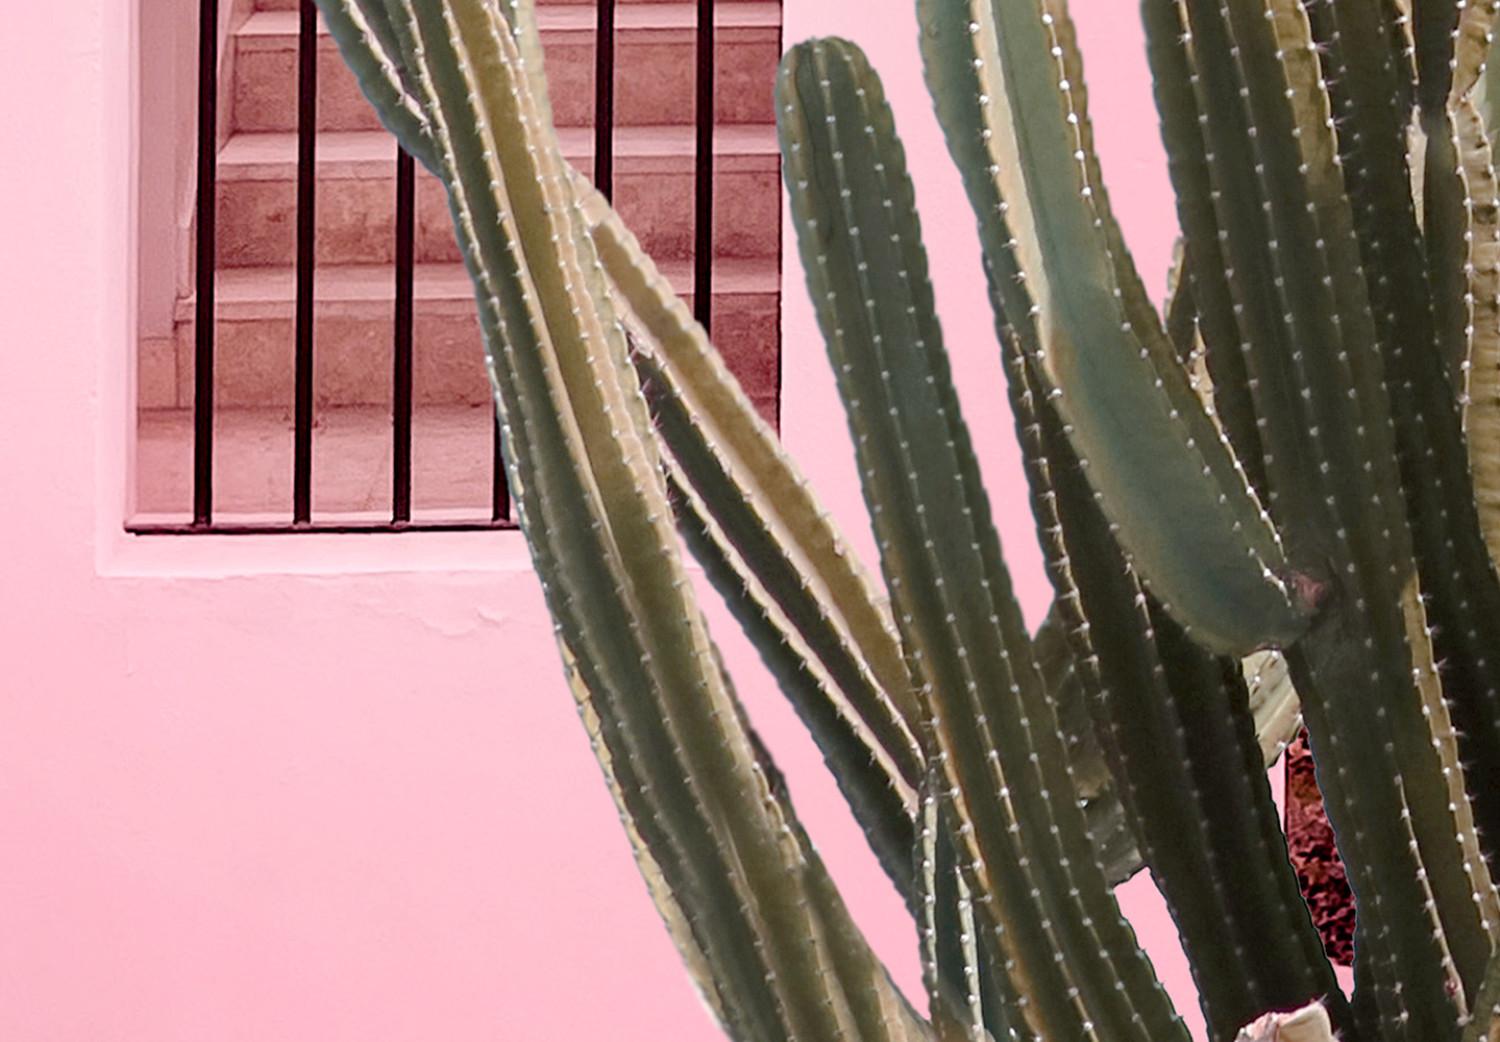 Cuadro moderno Miami Cactus - Pink Holiday Home Against a Blue Sky